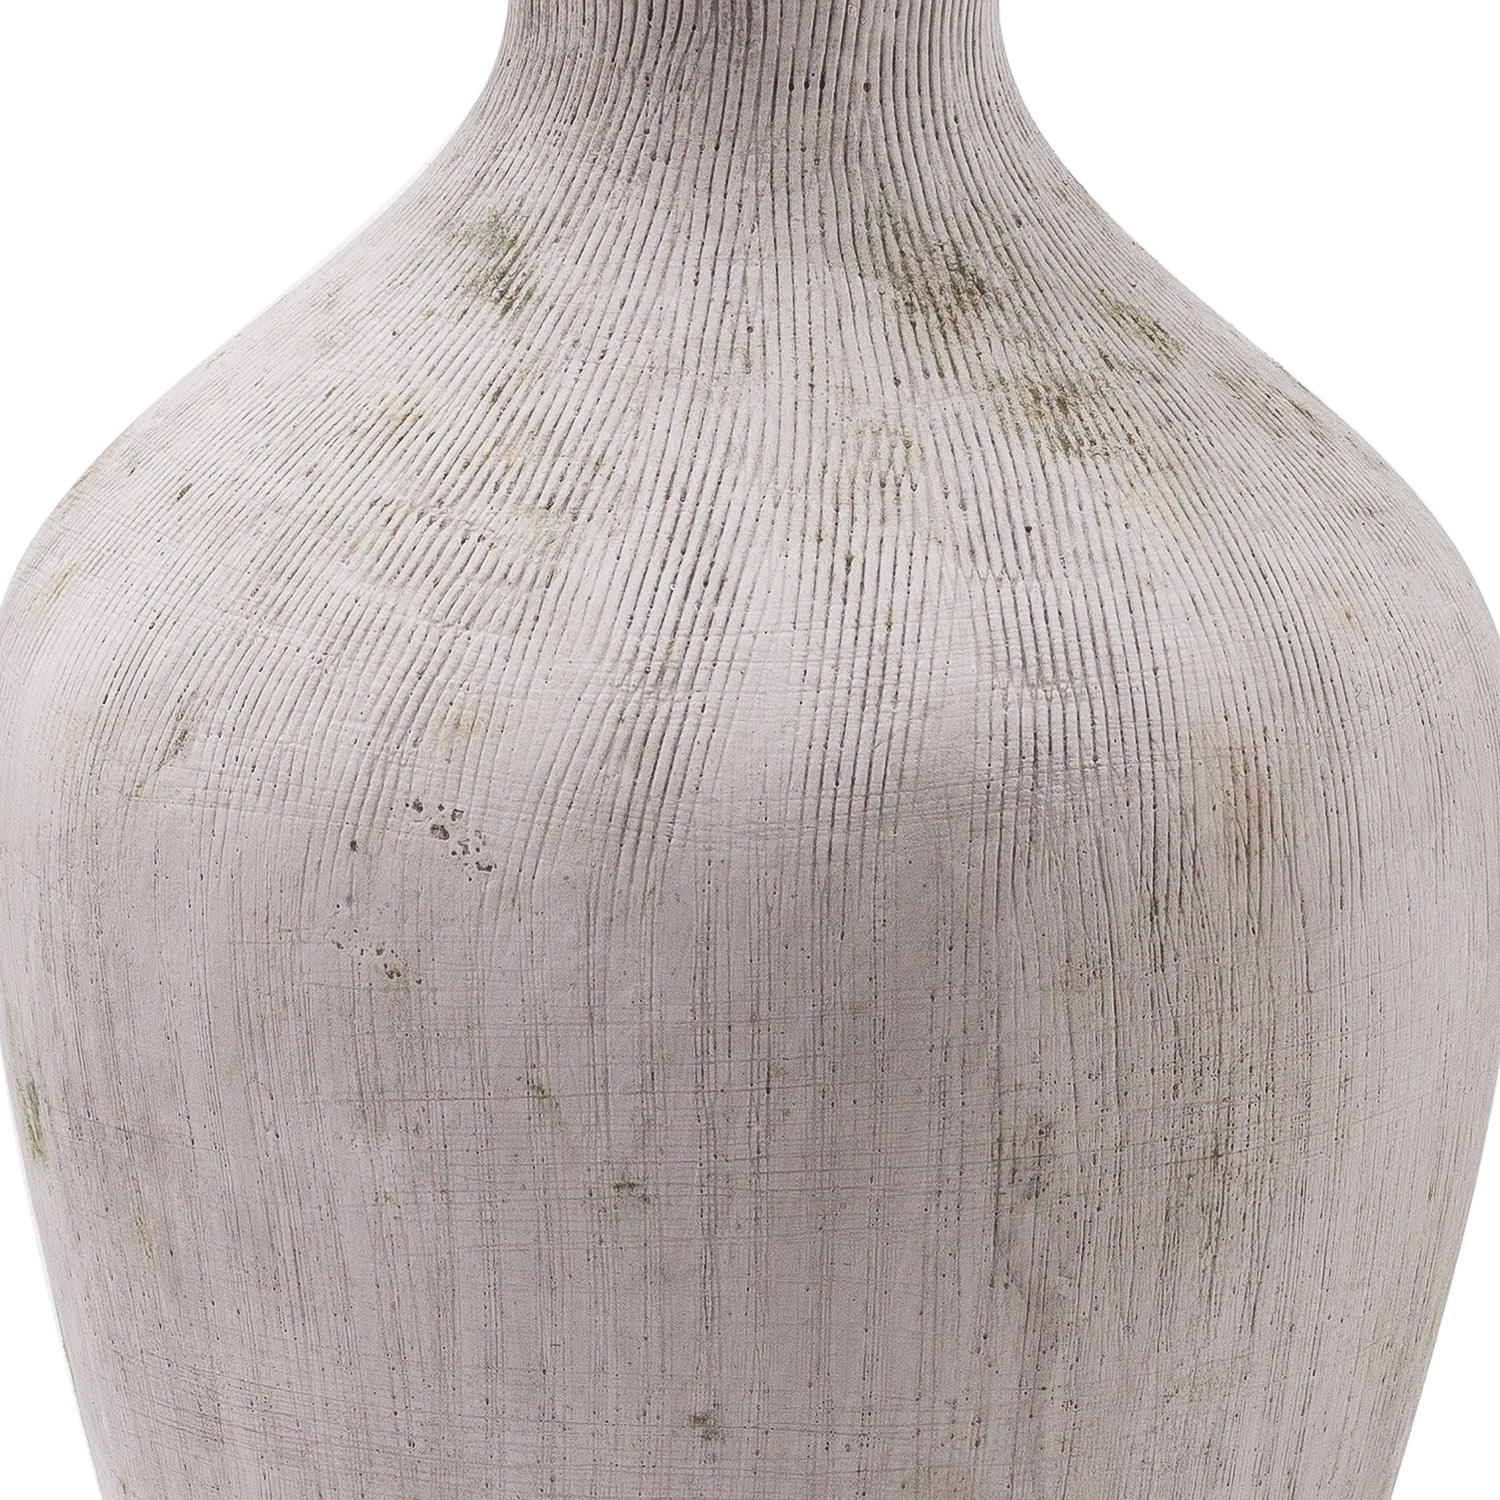 Bloomville Ellipse Stone Vase - Image 2